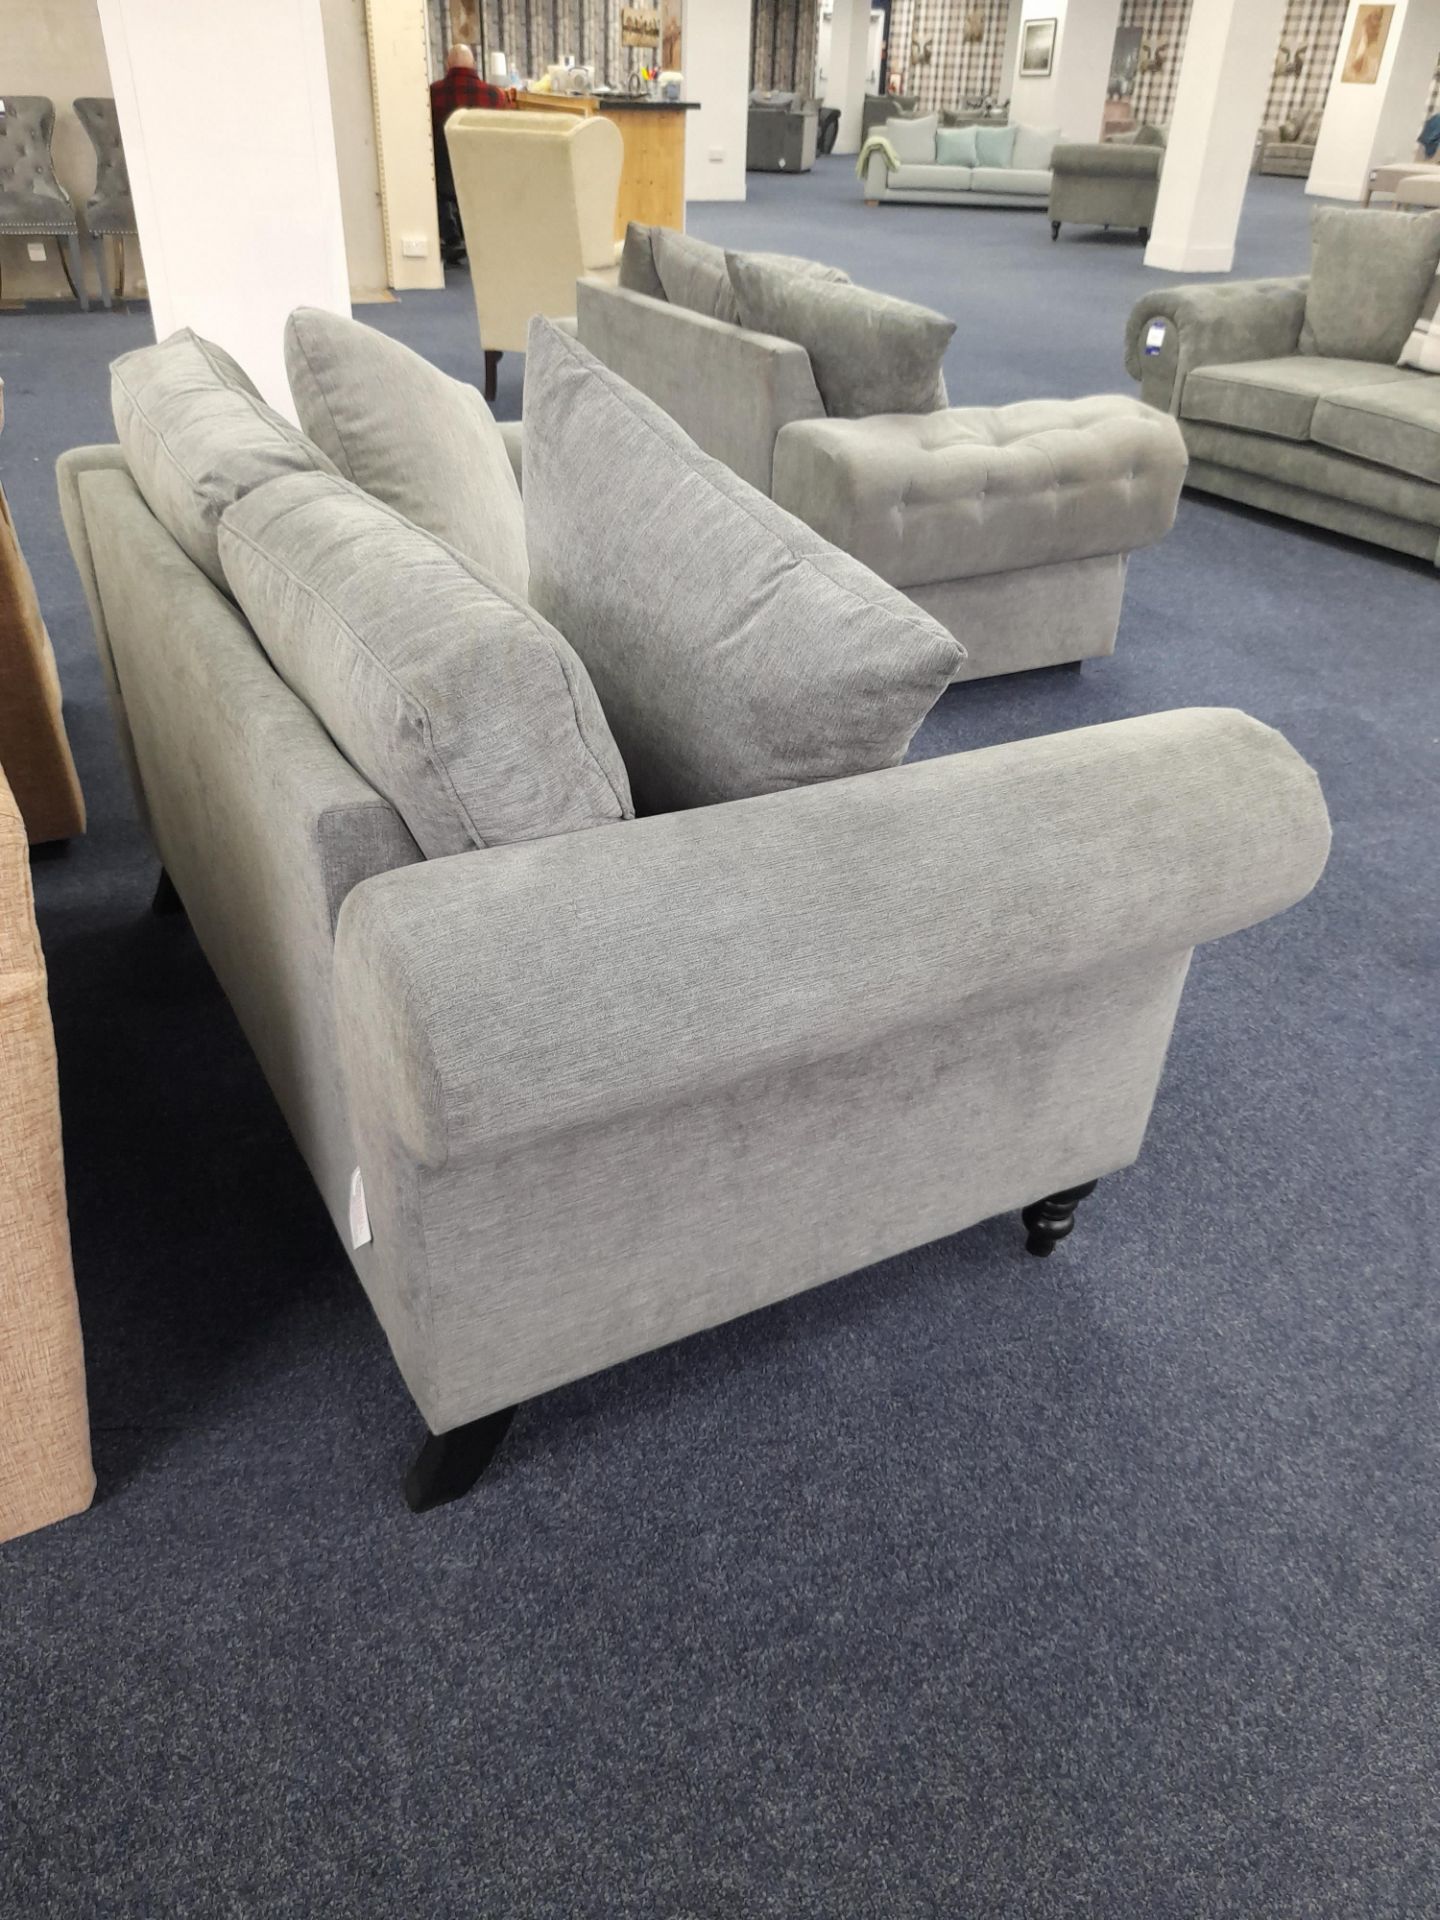 Grey fabric upholstered, 2 seater, standard cushioned back sofa (Return - Damage to arm) - Image 4 of 4